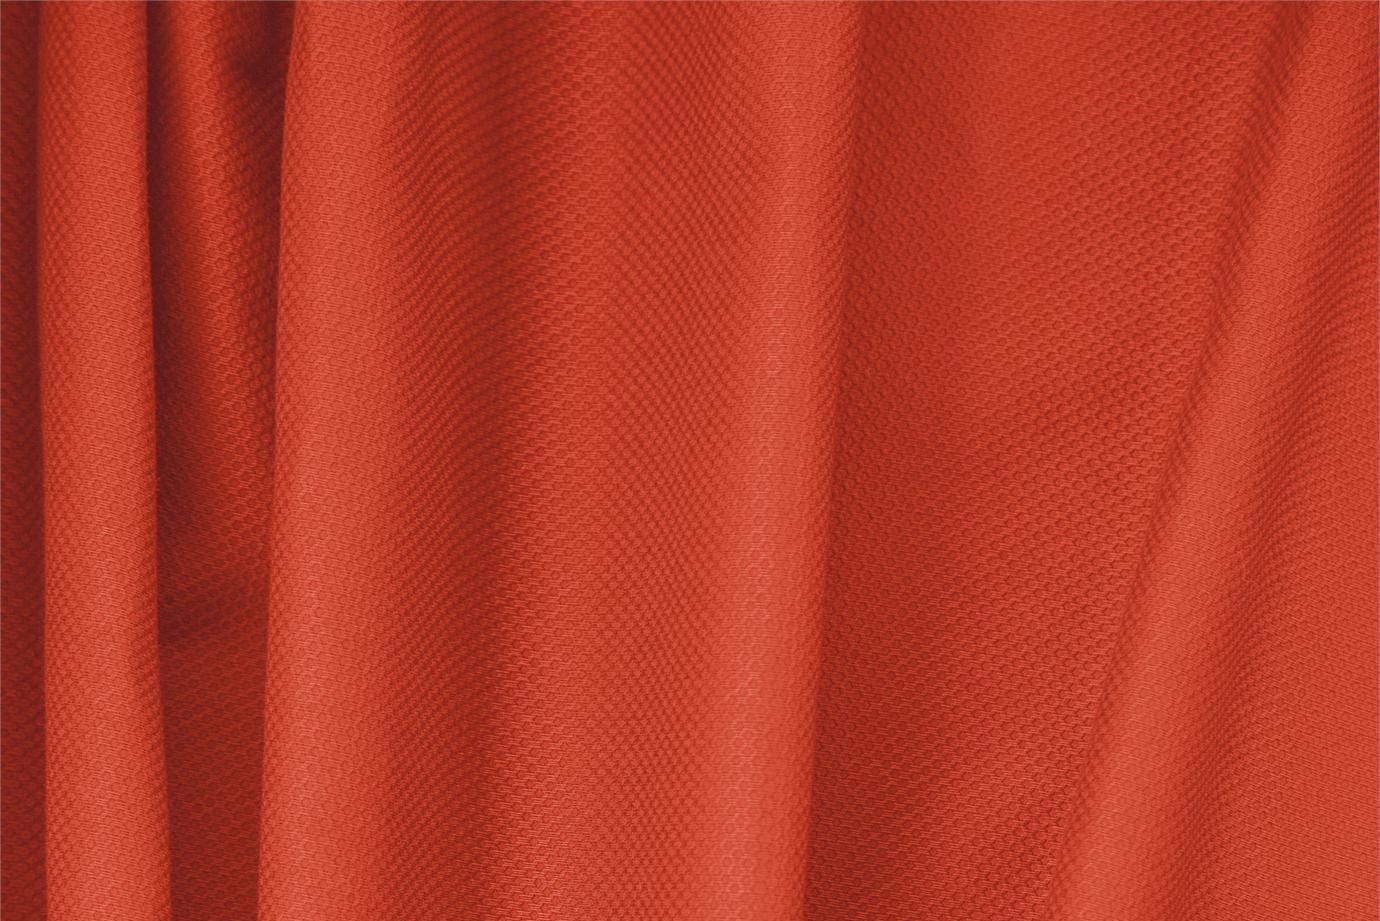 Fuchsia stretch cotton piqué fabric for dressmaking